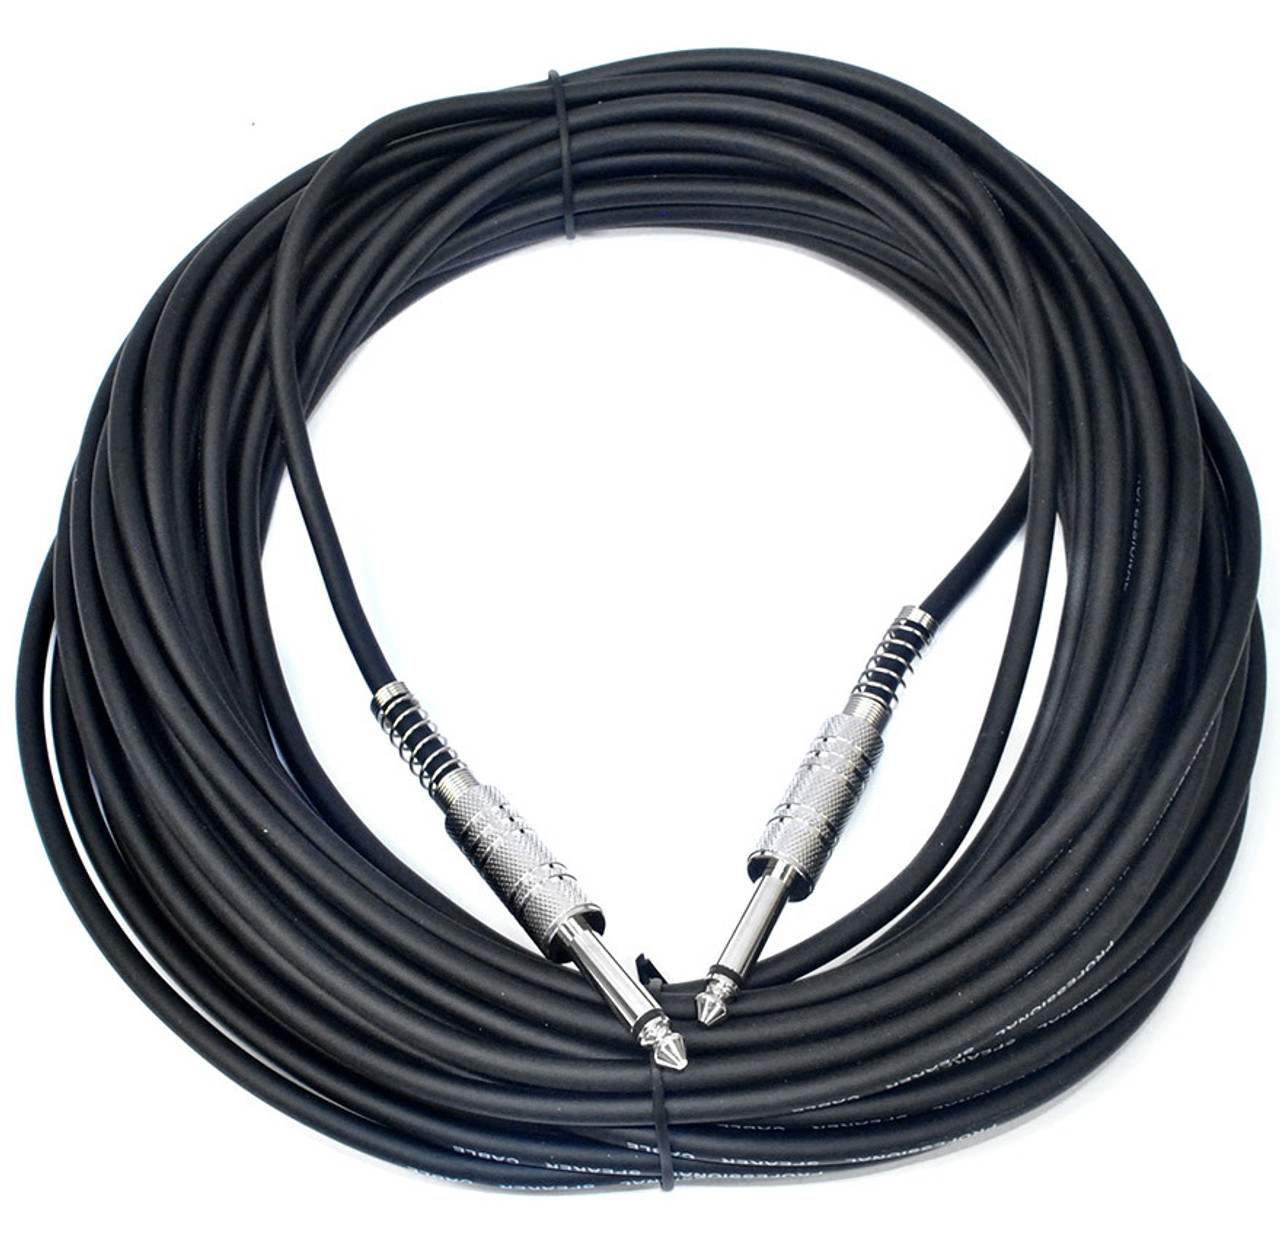 Leem 50ft Speaker Cable (1/4" Straight TS - 1/4" Straight TS)